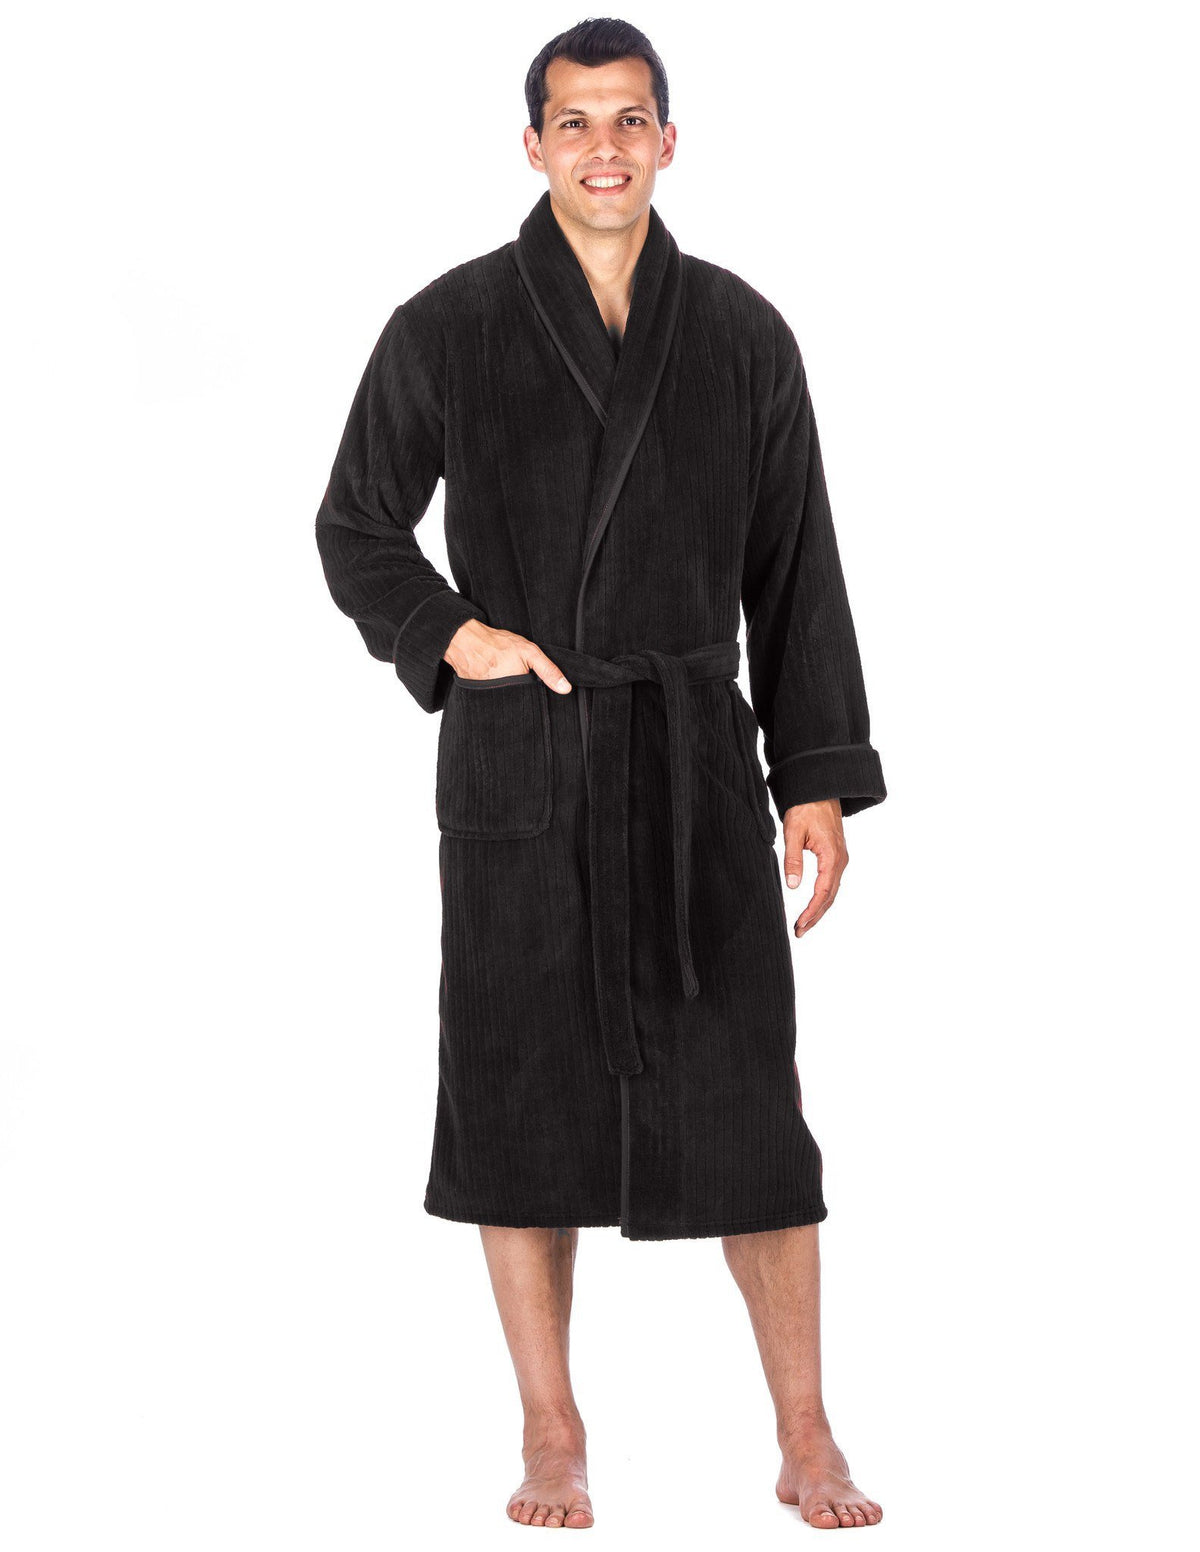 Men's Premium Coral Fleece Plush Spa/Bath Robe - Iron